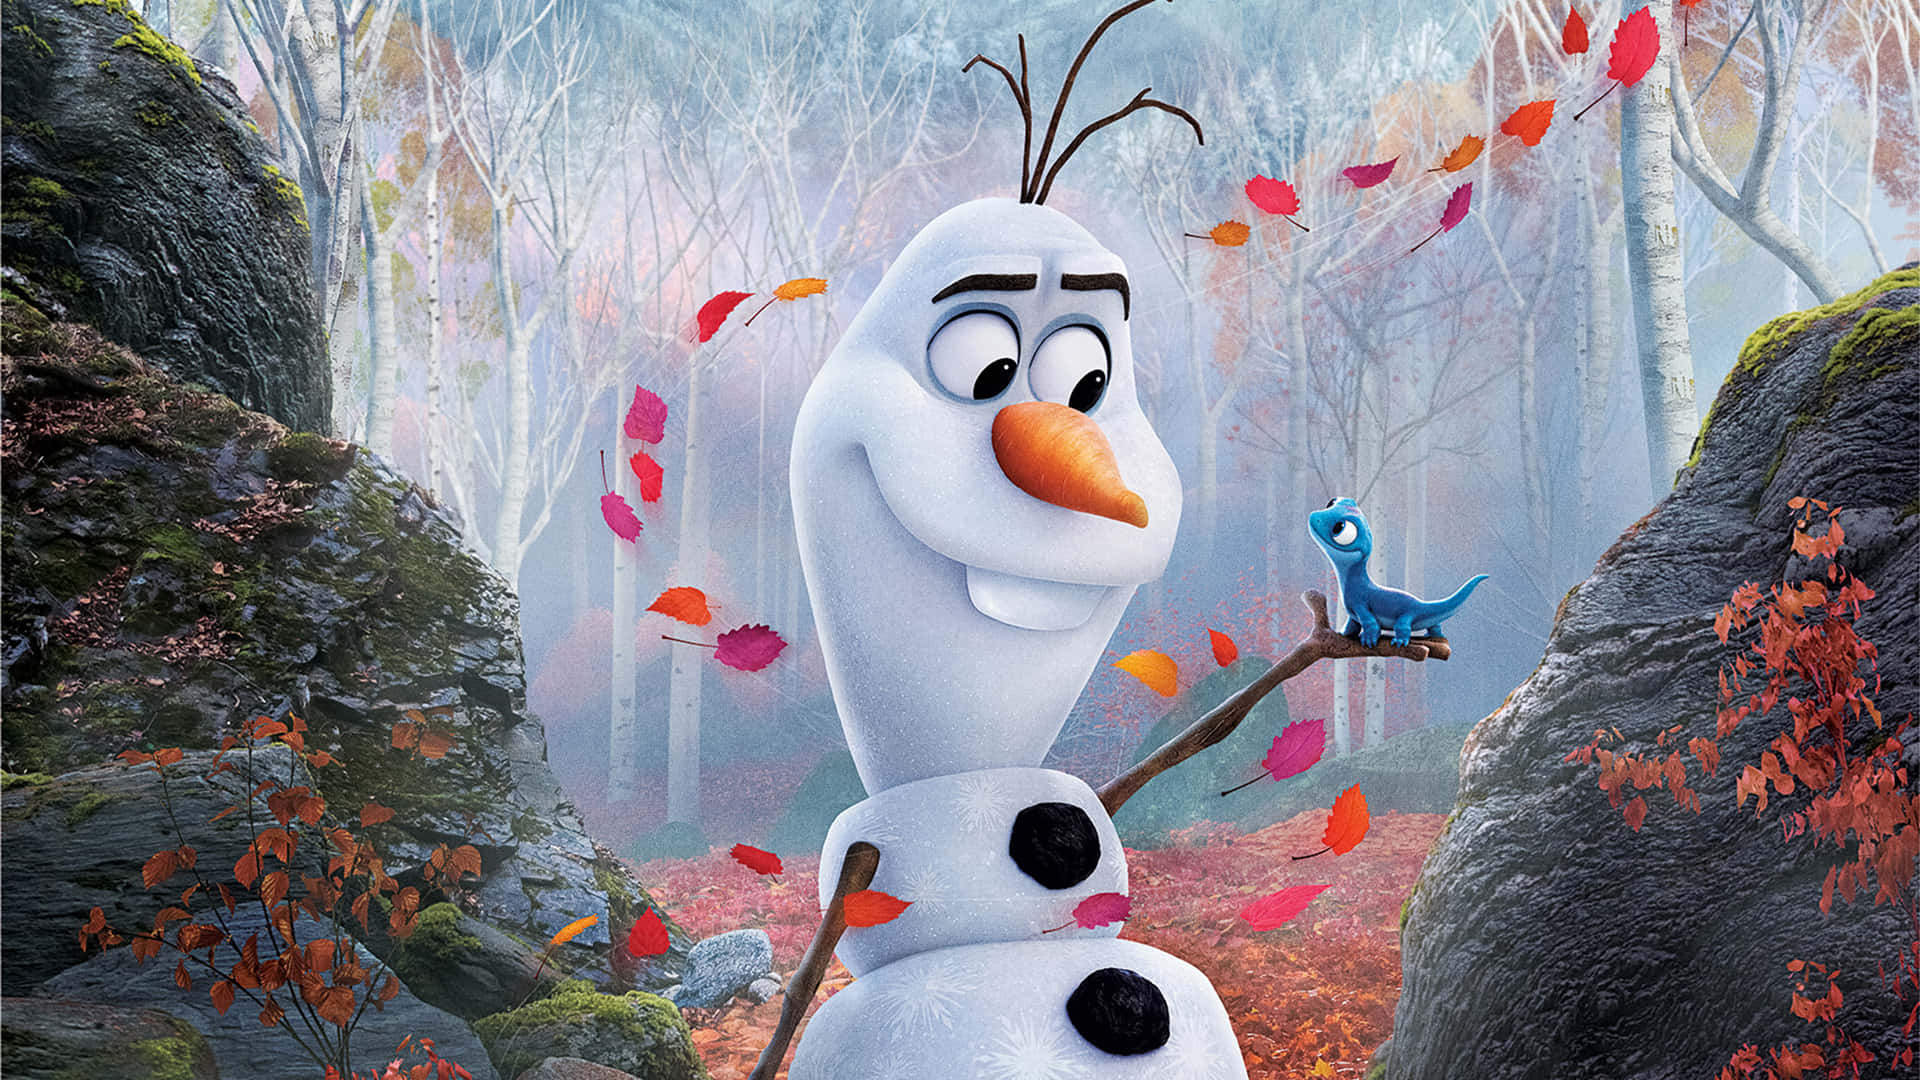 Allasfavoritsnögubbe, Olaf!